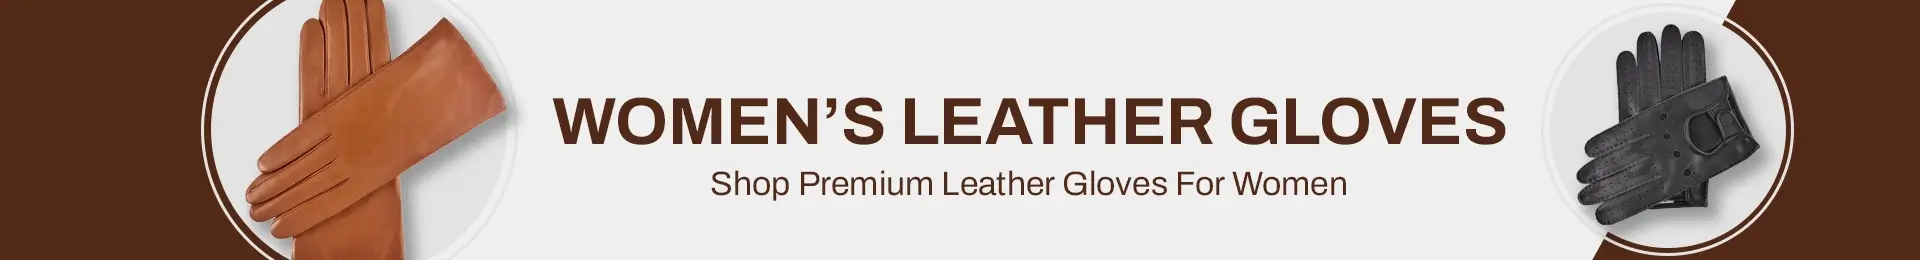 Shop Stylish Women's Leather Gloves